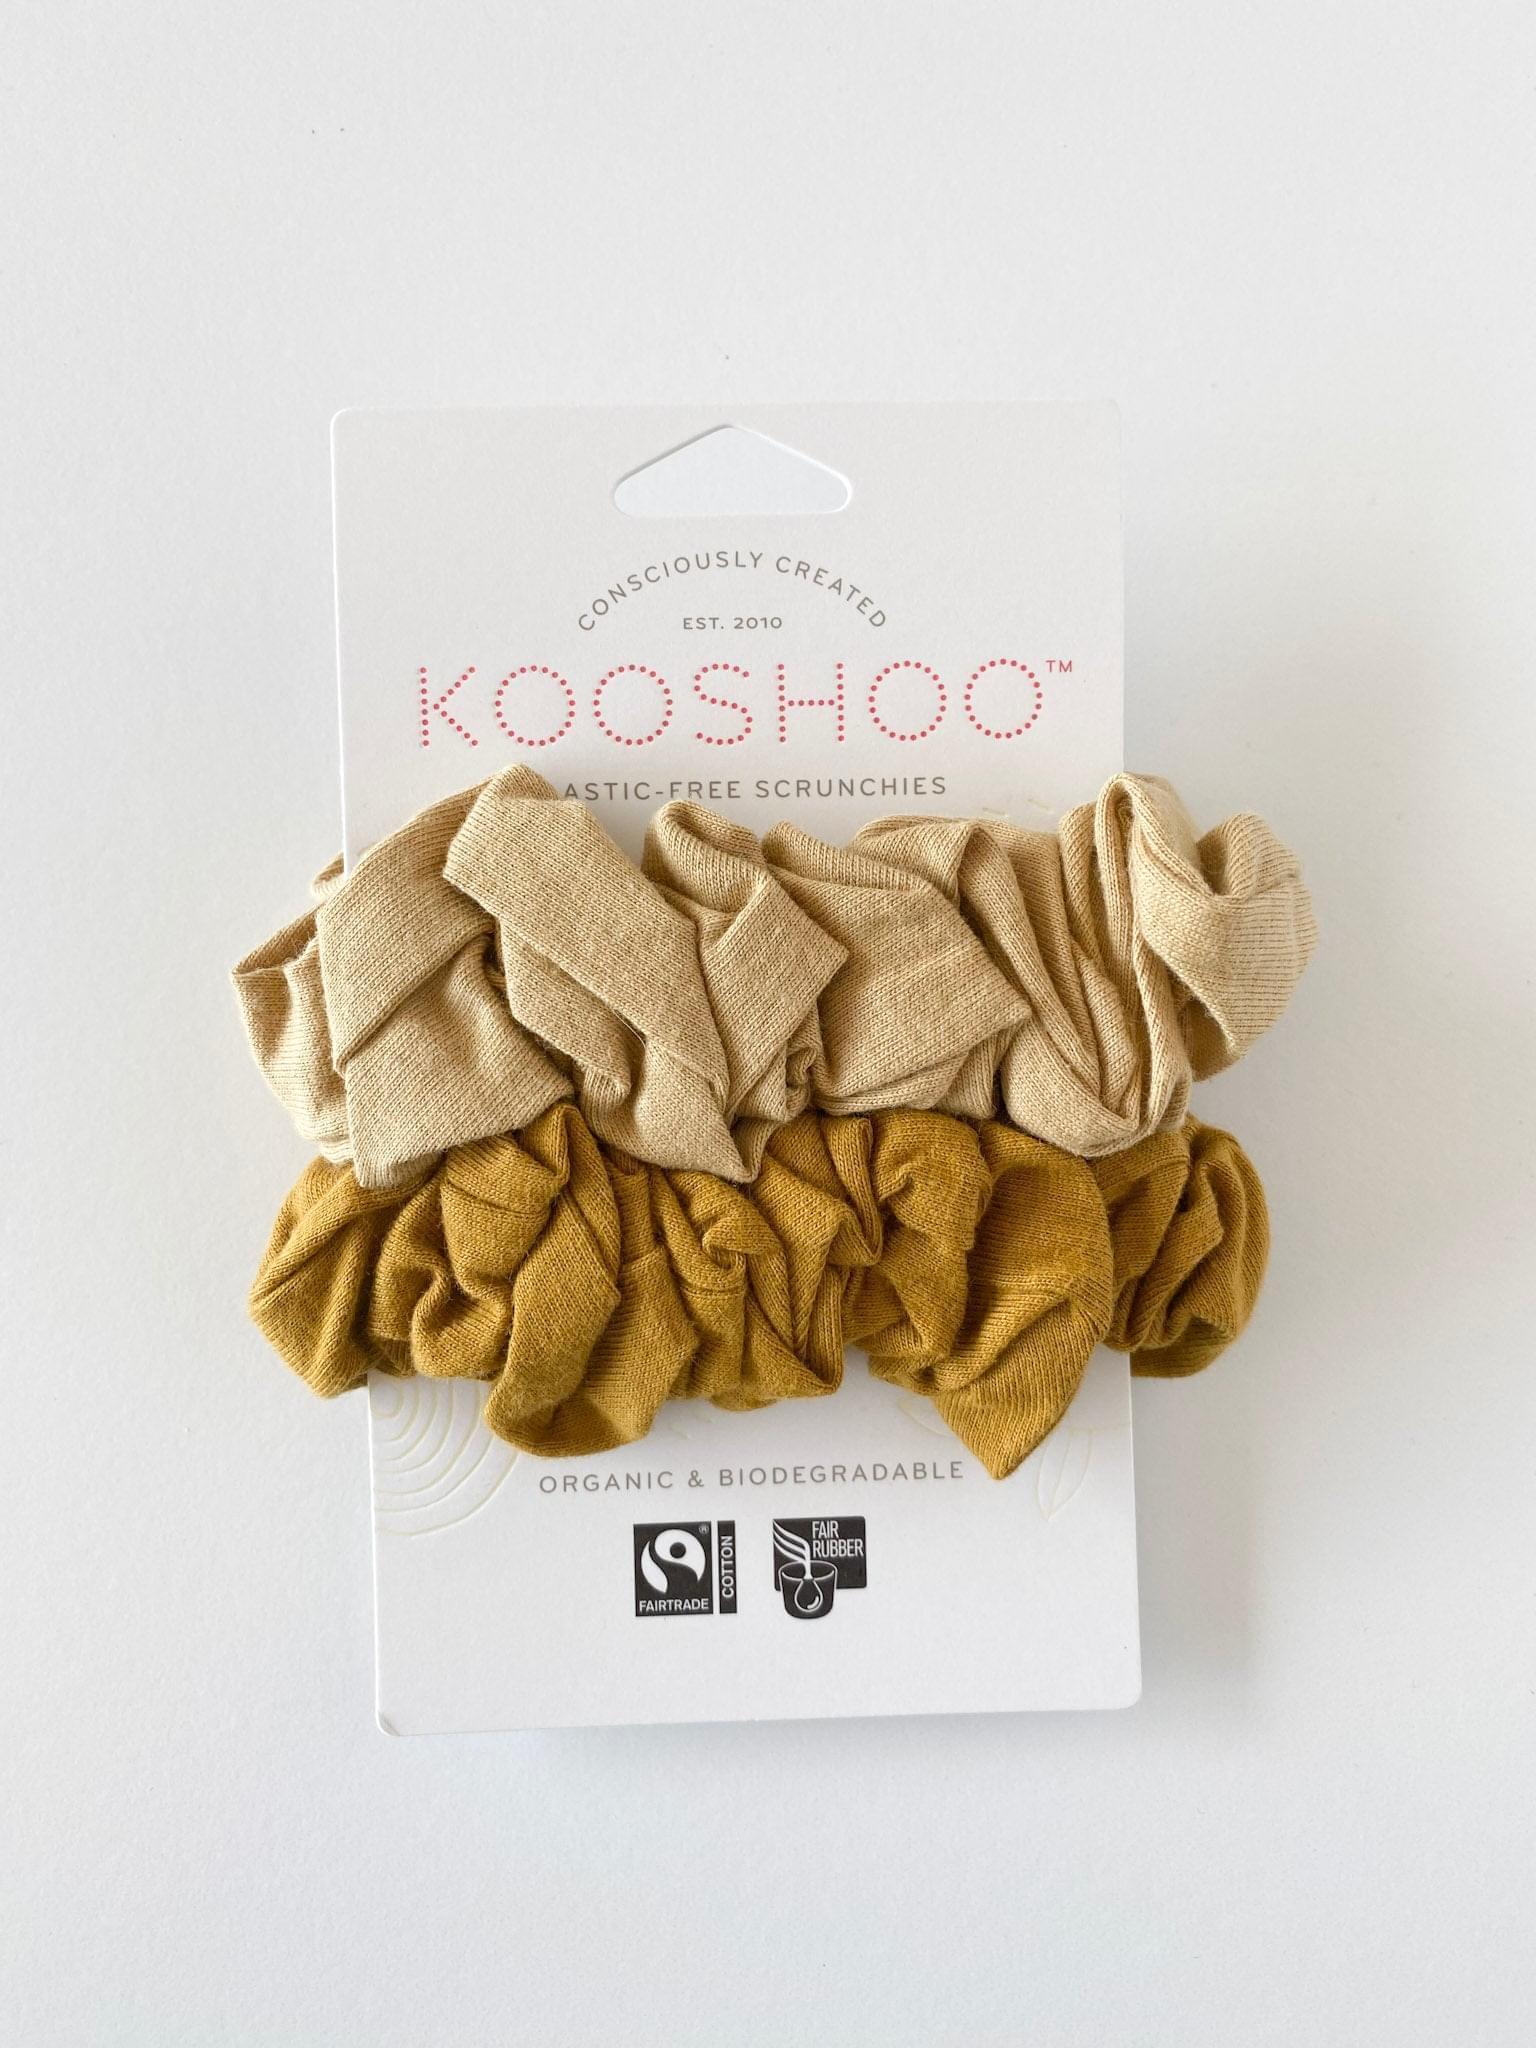 KOOSHOO Plastic-free Scrunchies - Gold Sand - BeFreeDaily